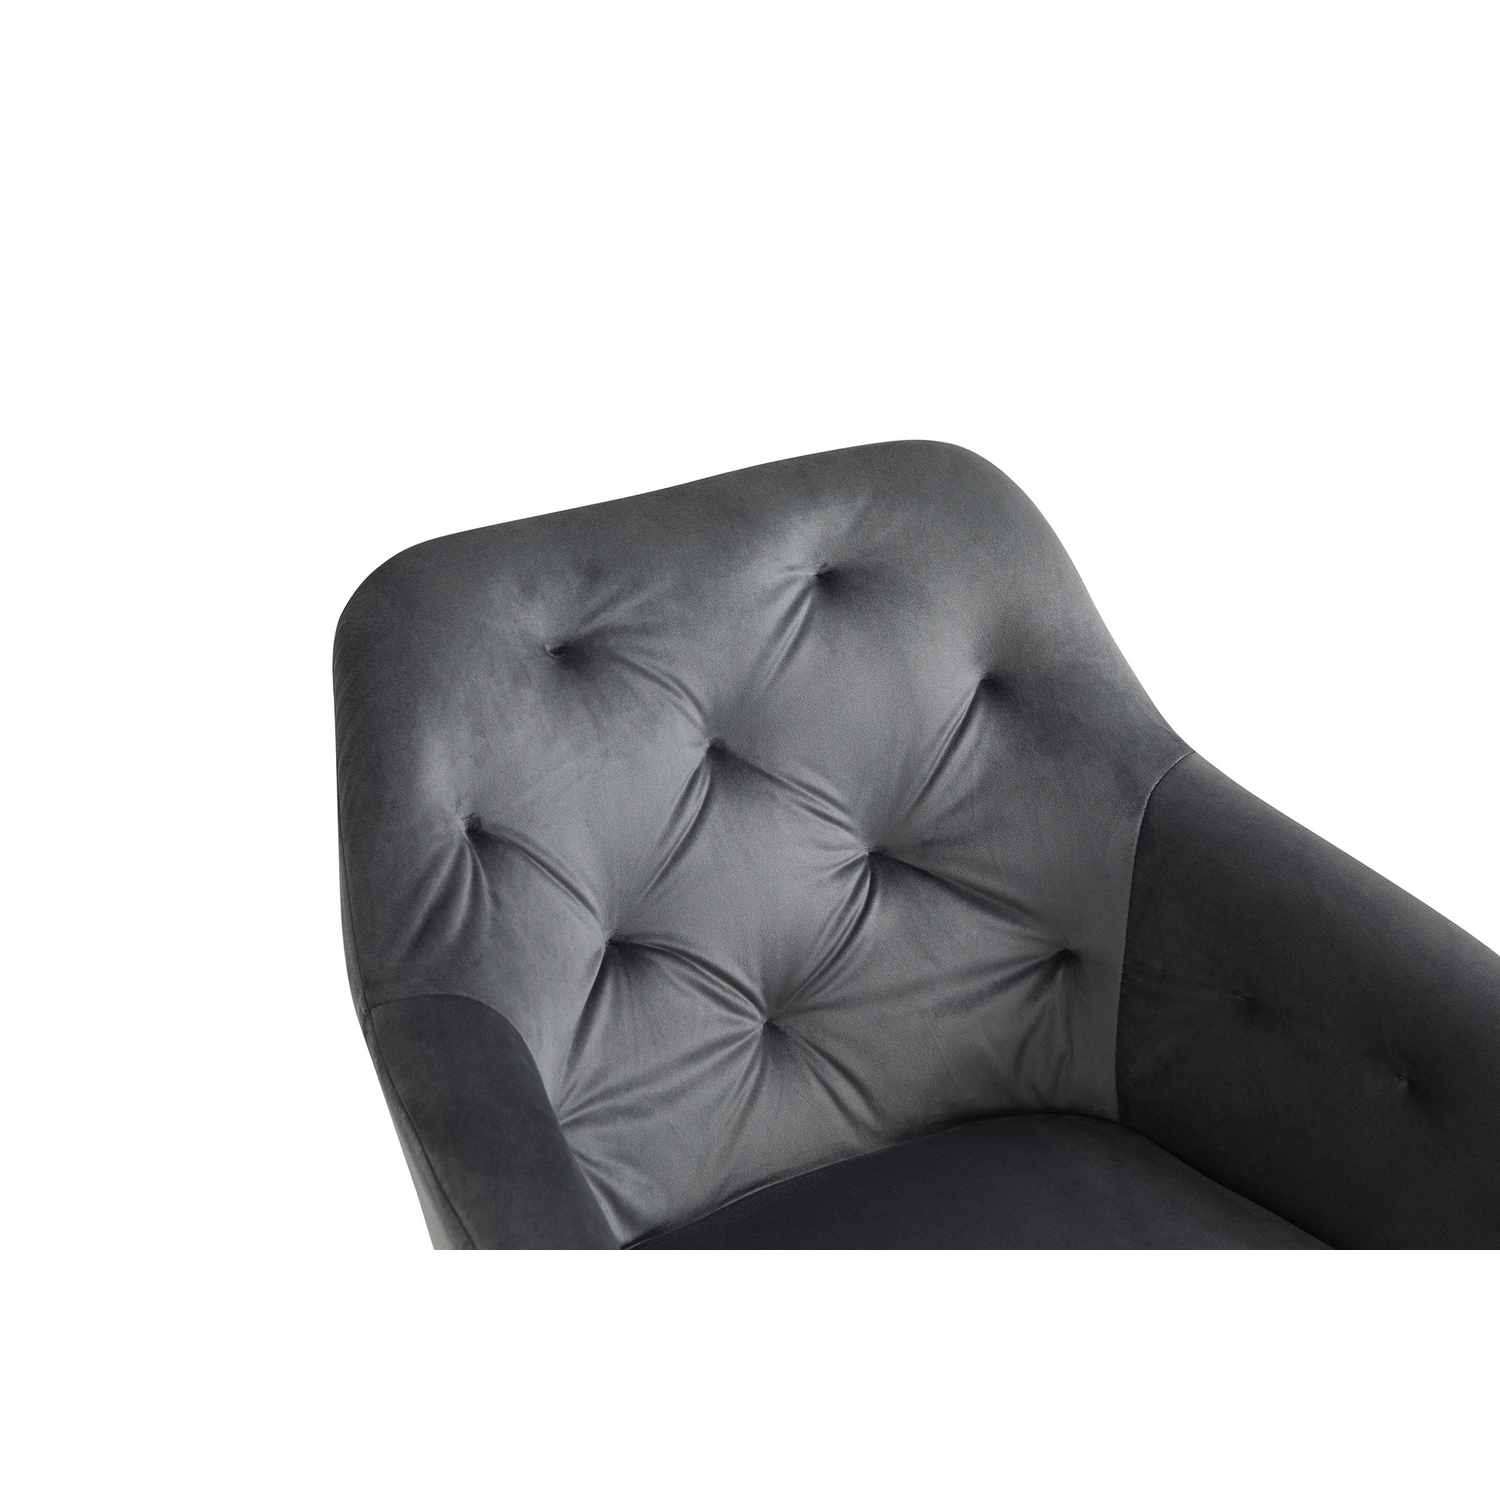 SalesFever Stuhl, Höhe: 85 cm, grau/schwarz